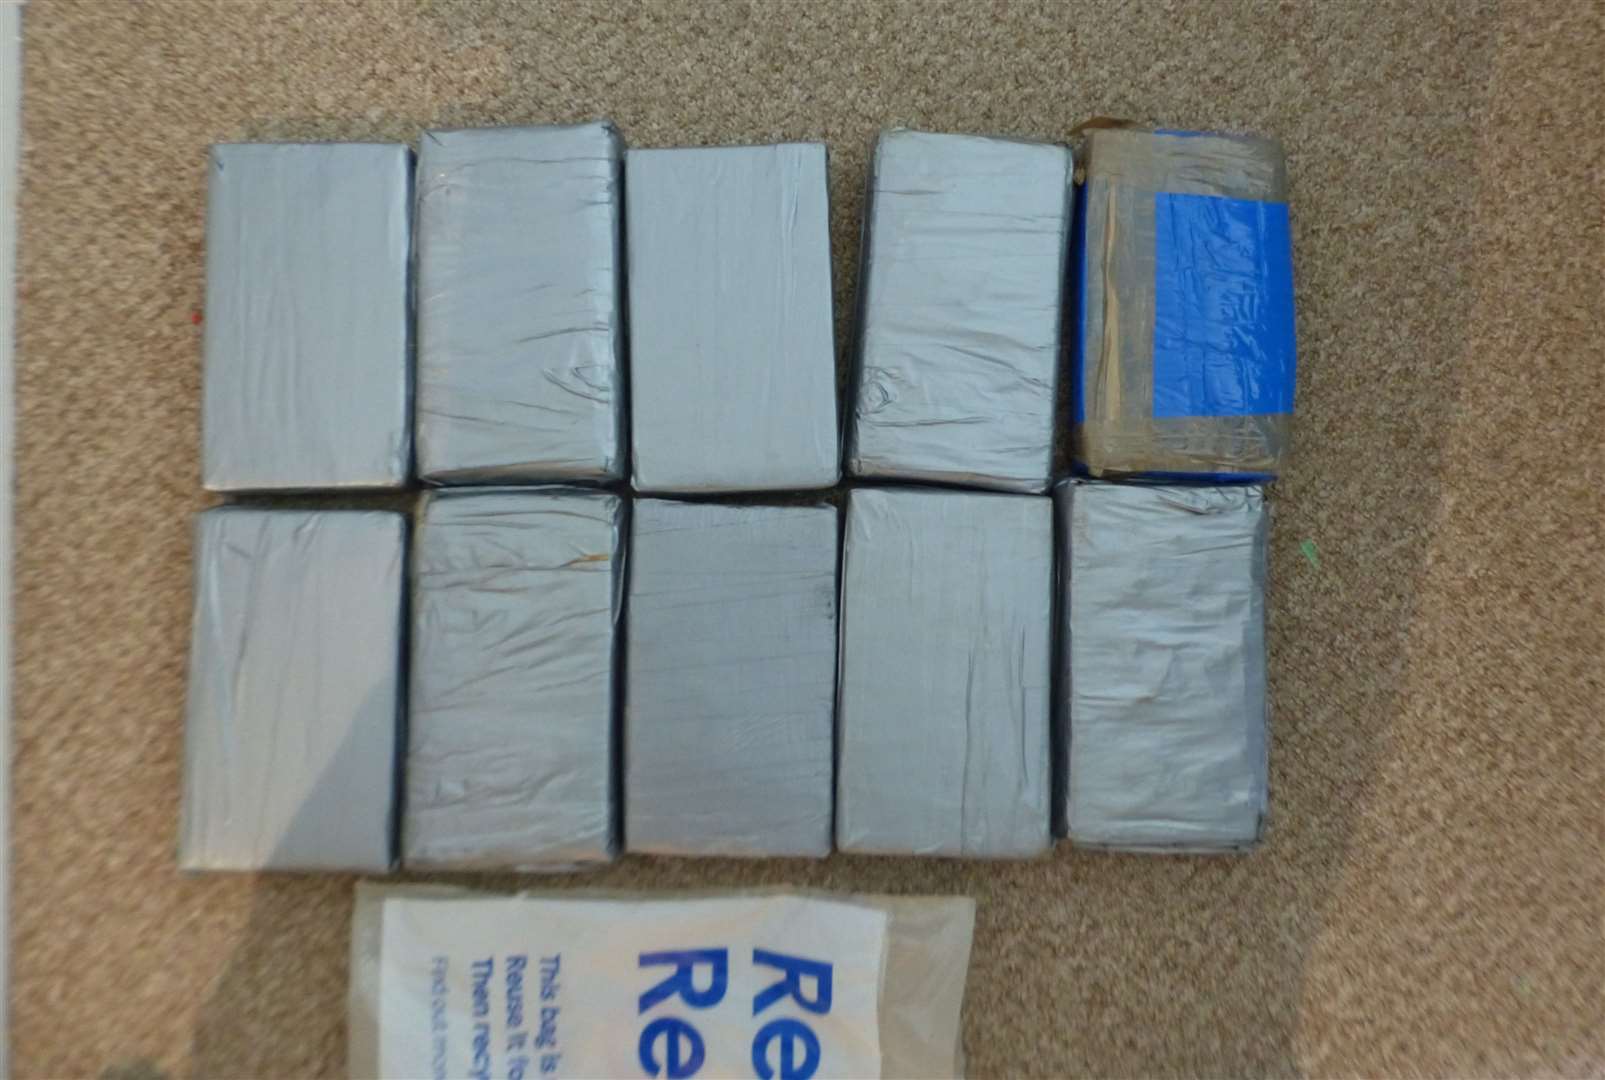 11kgs of cocaine were seized